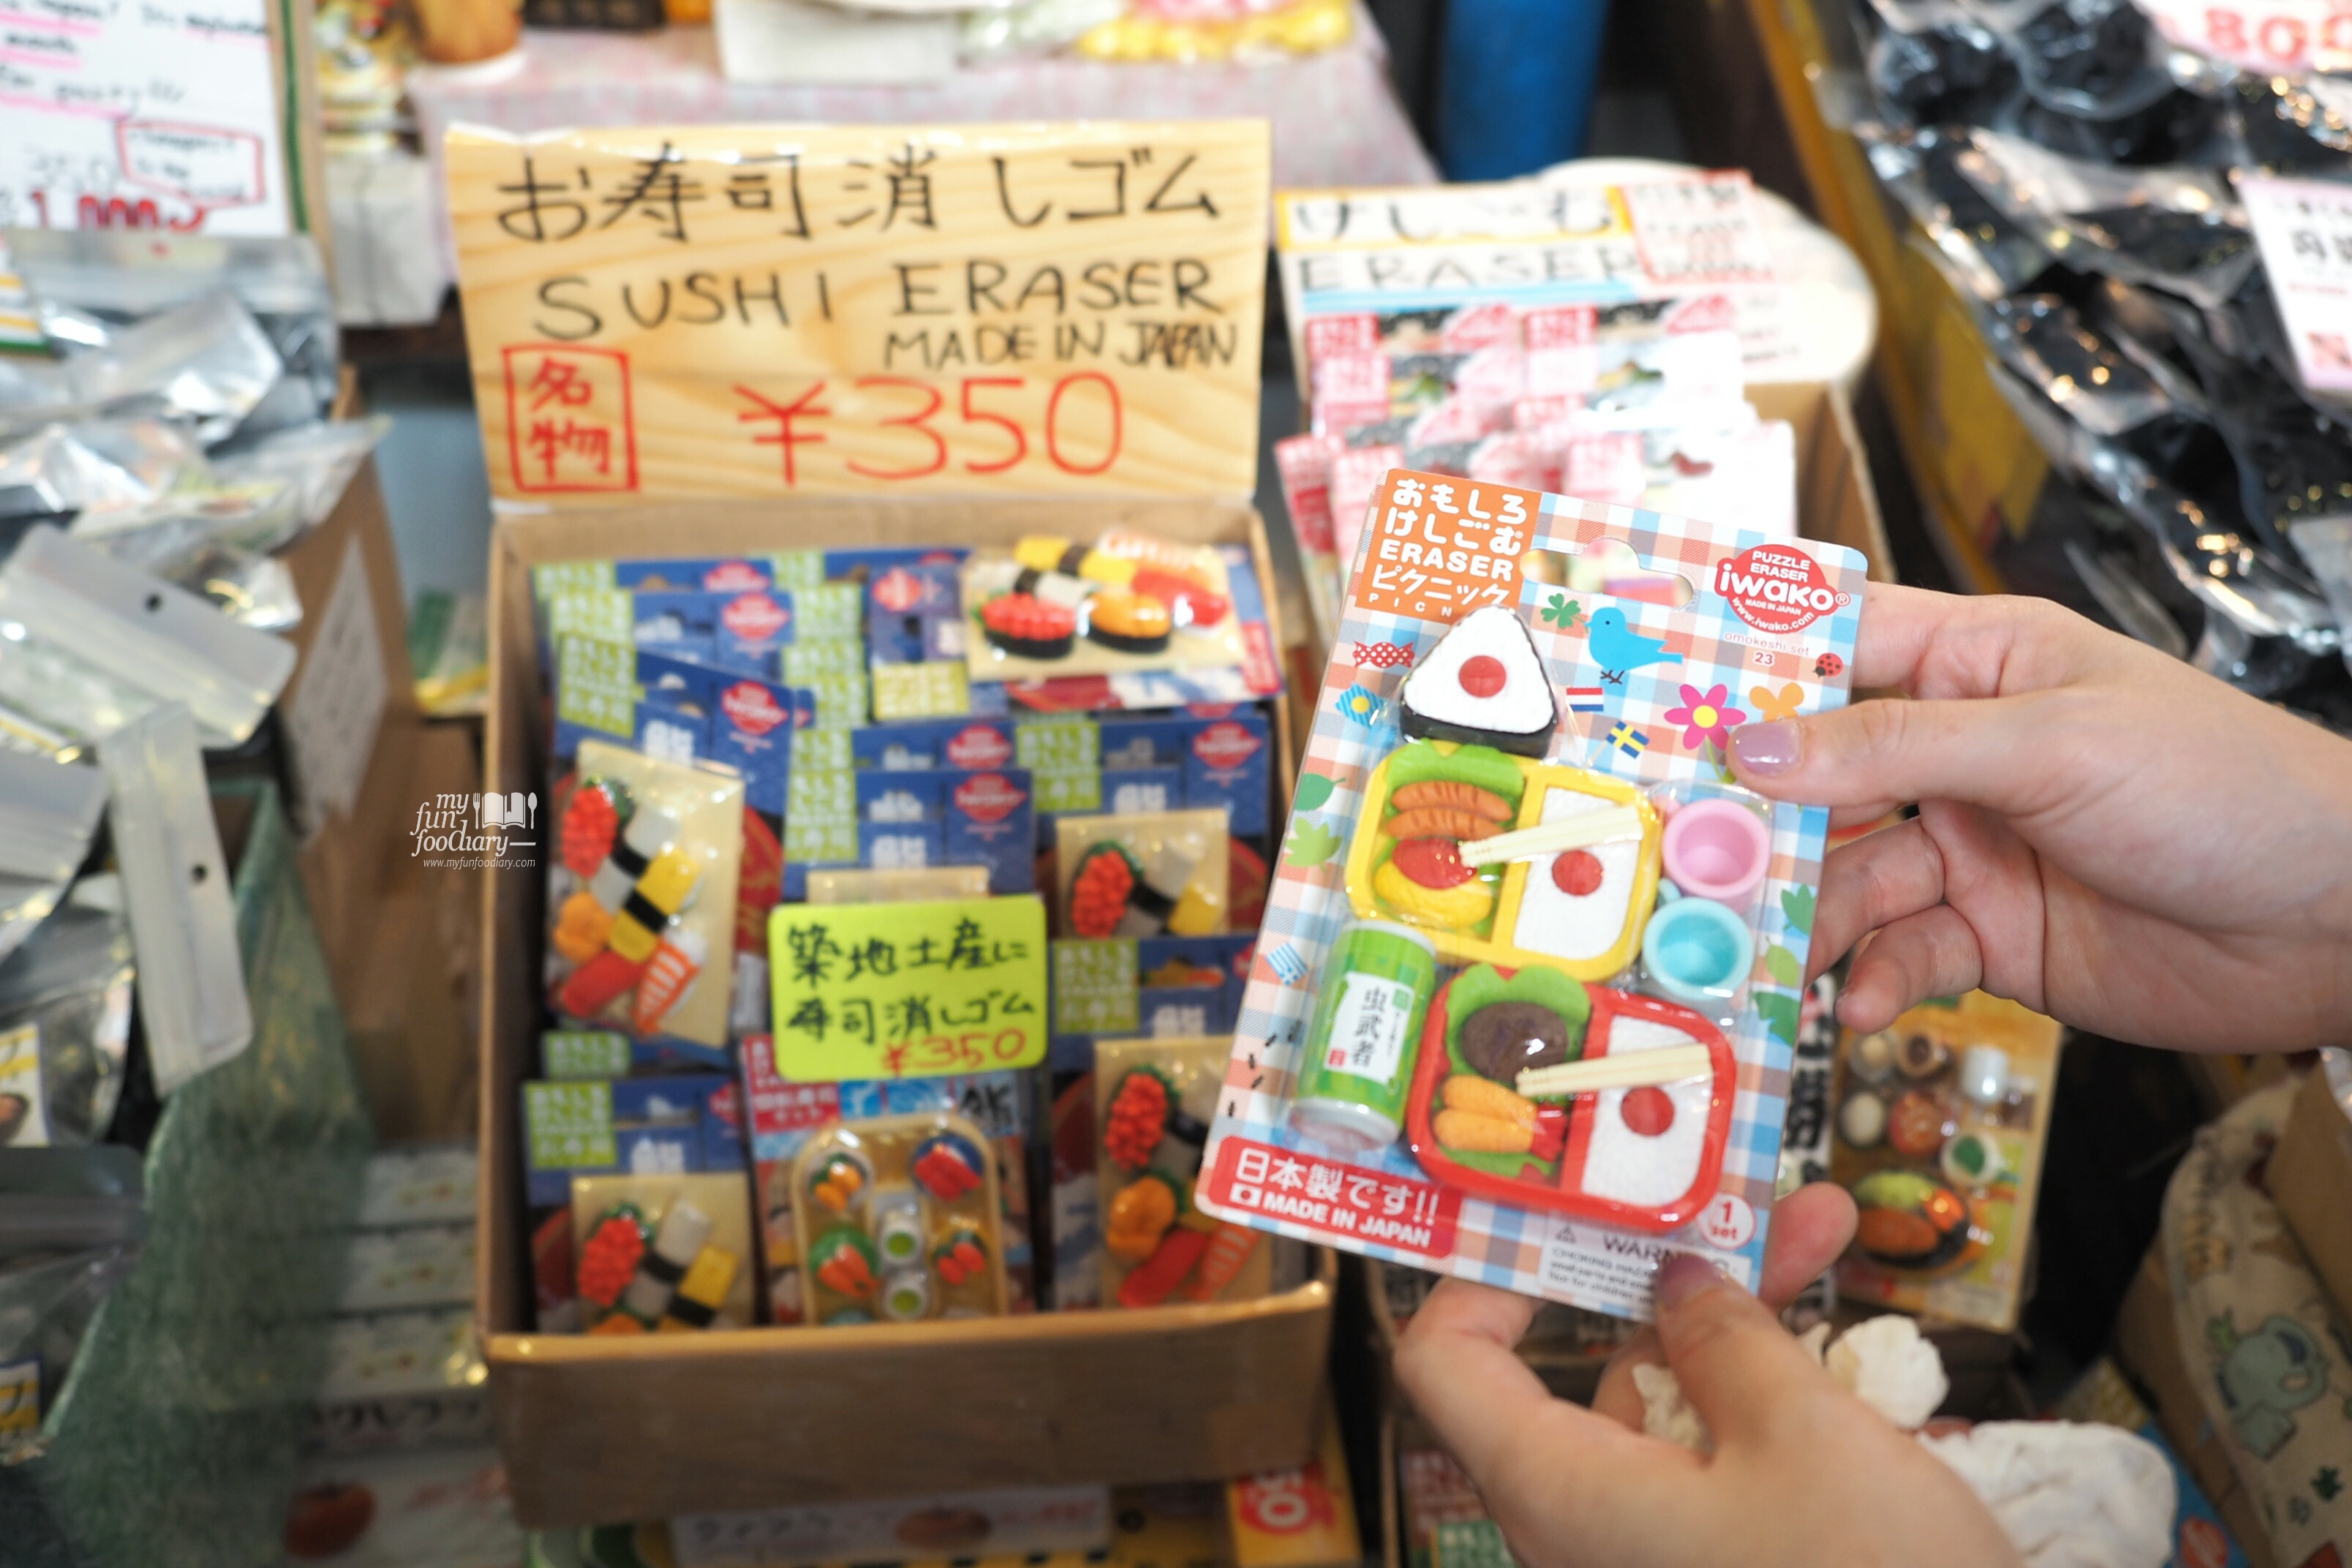 Cute sushi eraser for souvenirs at Tsukiji Market by Myfunfoodiary